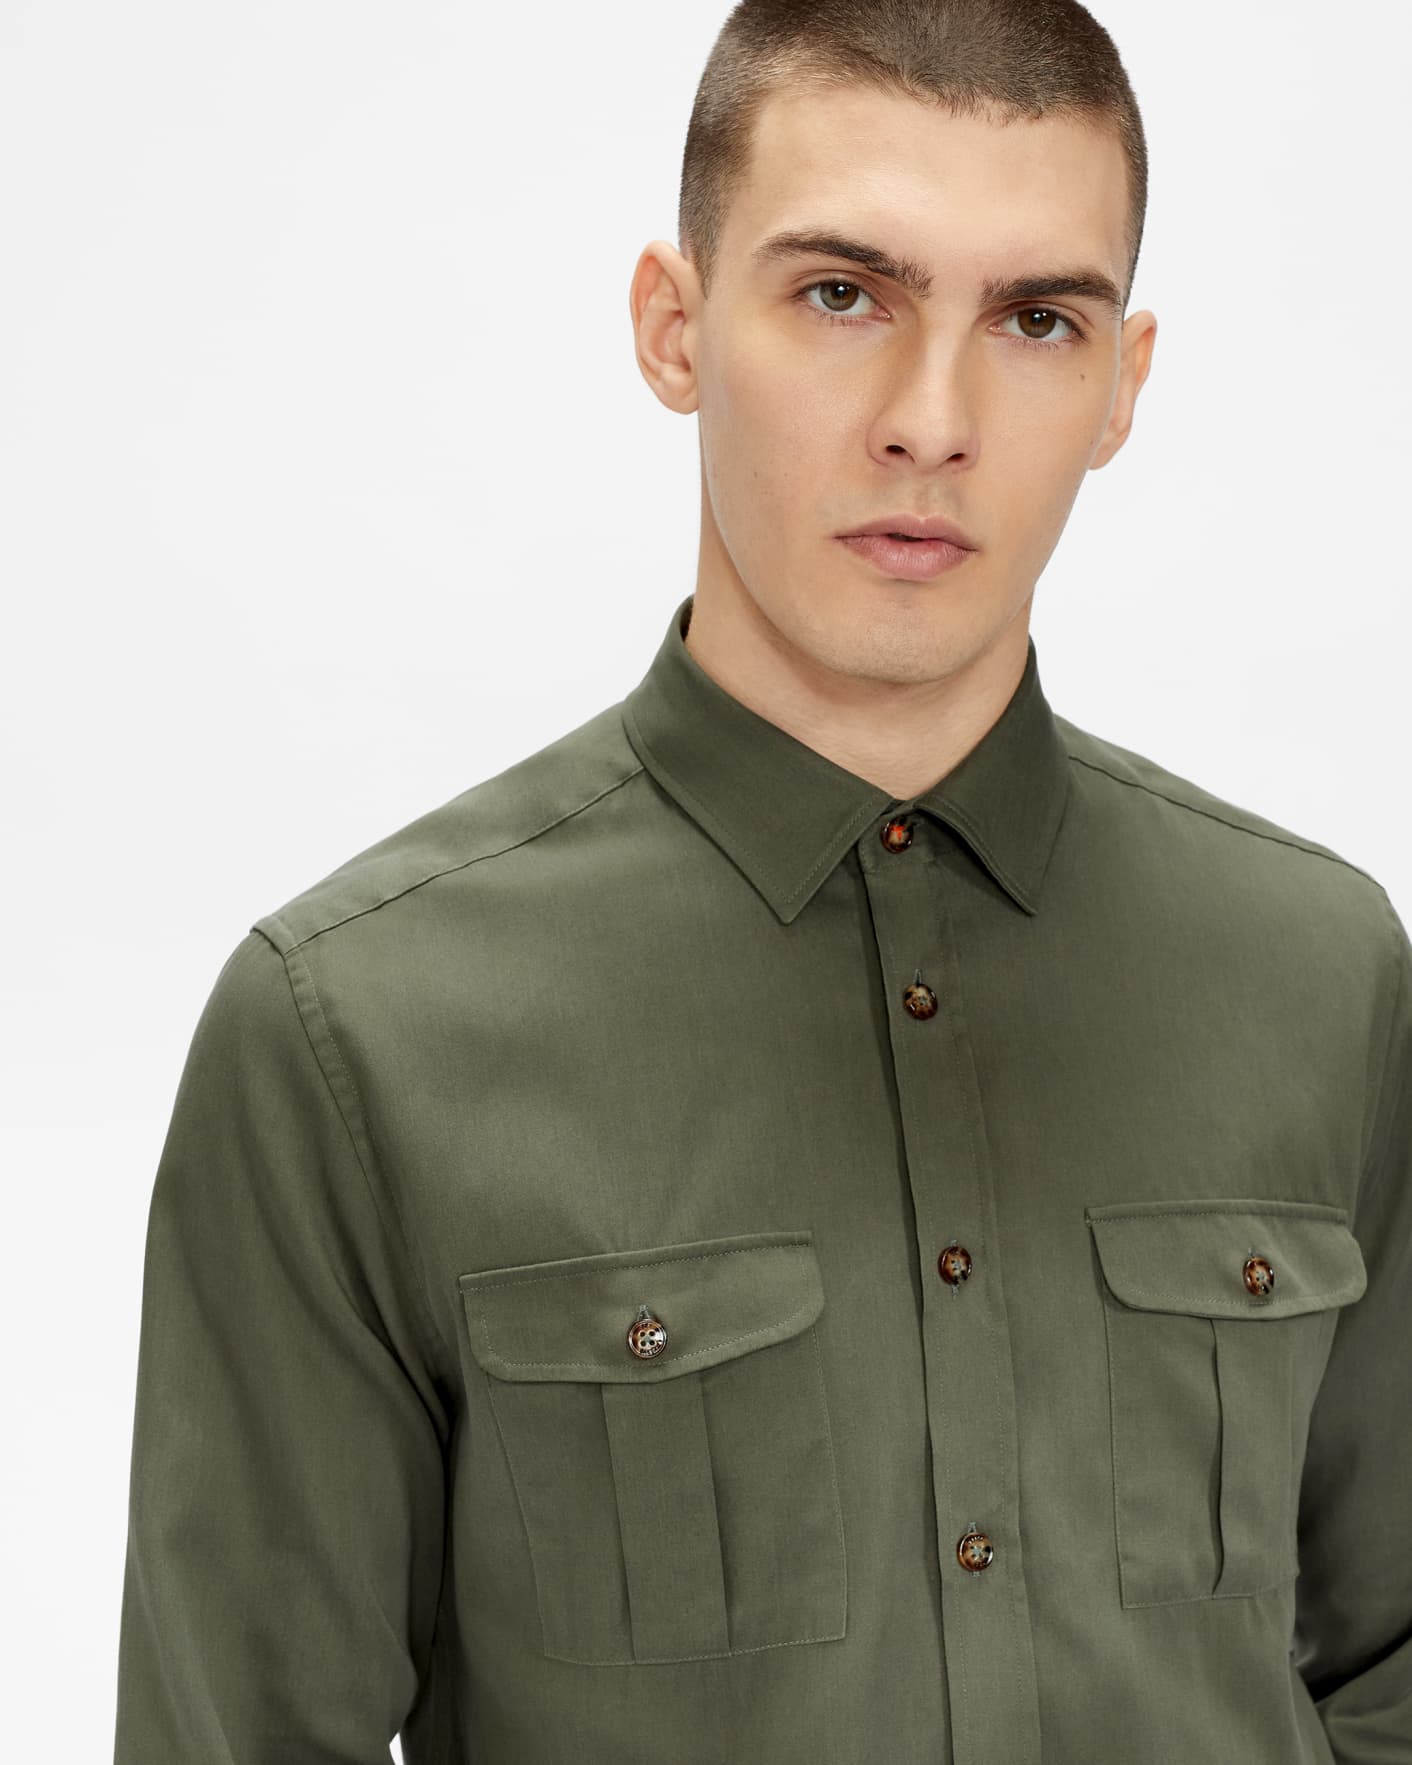 Khaki Military Style Shirt Ted Baker